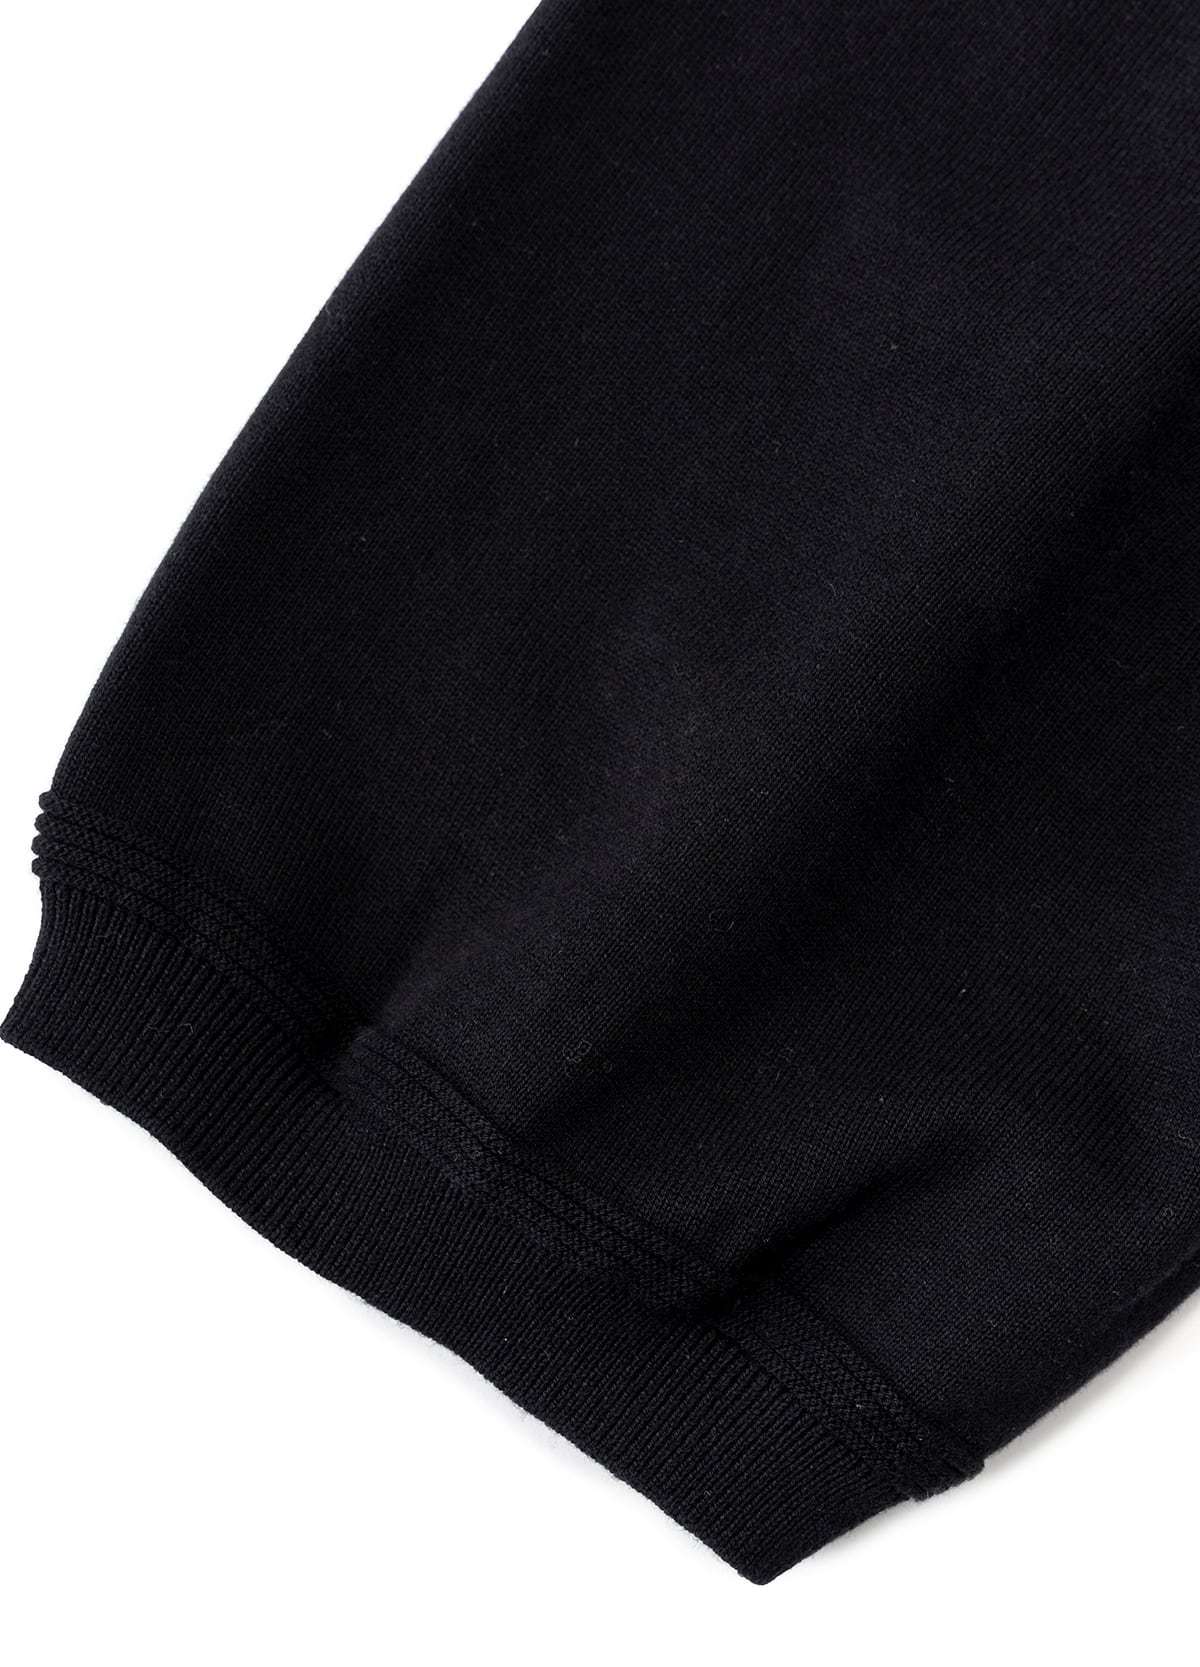 CONTROLLA+ cashmere blend short sleeve raglan knit (black)